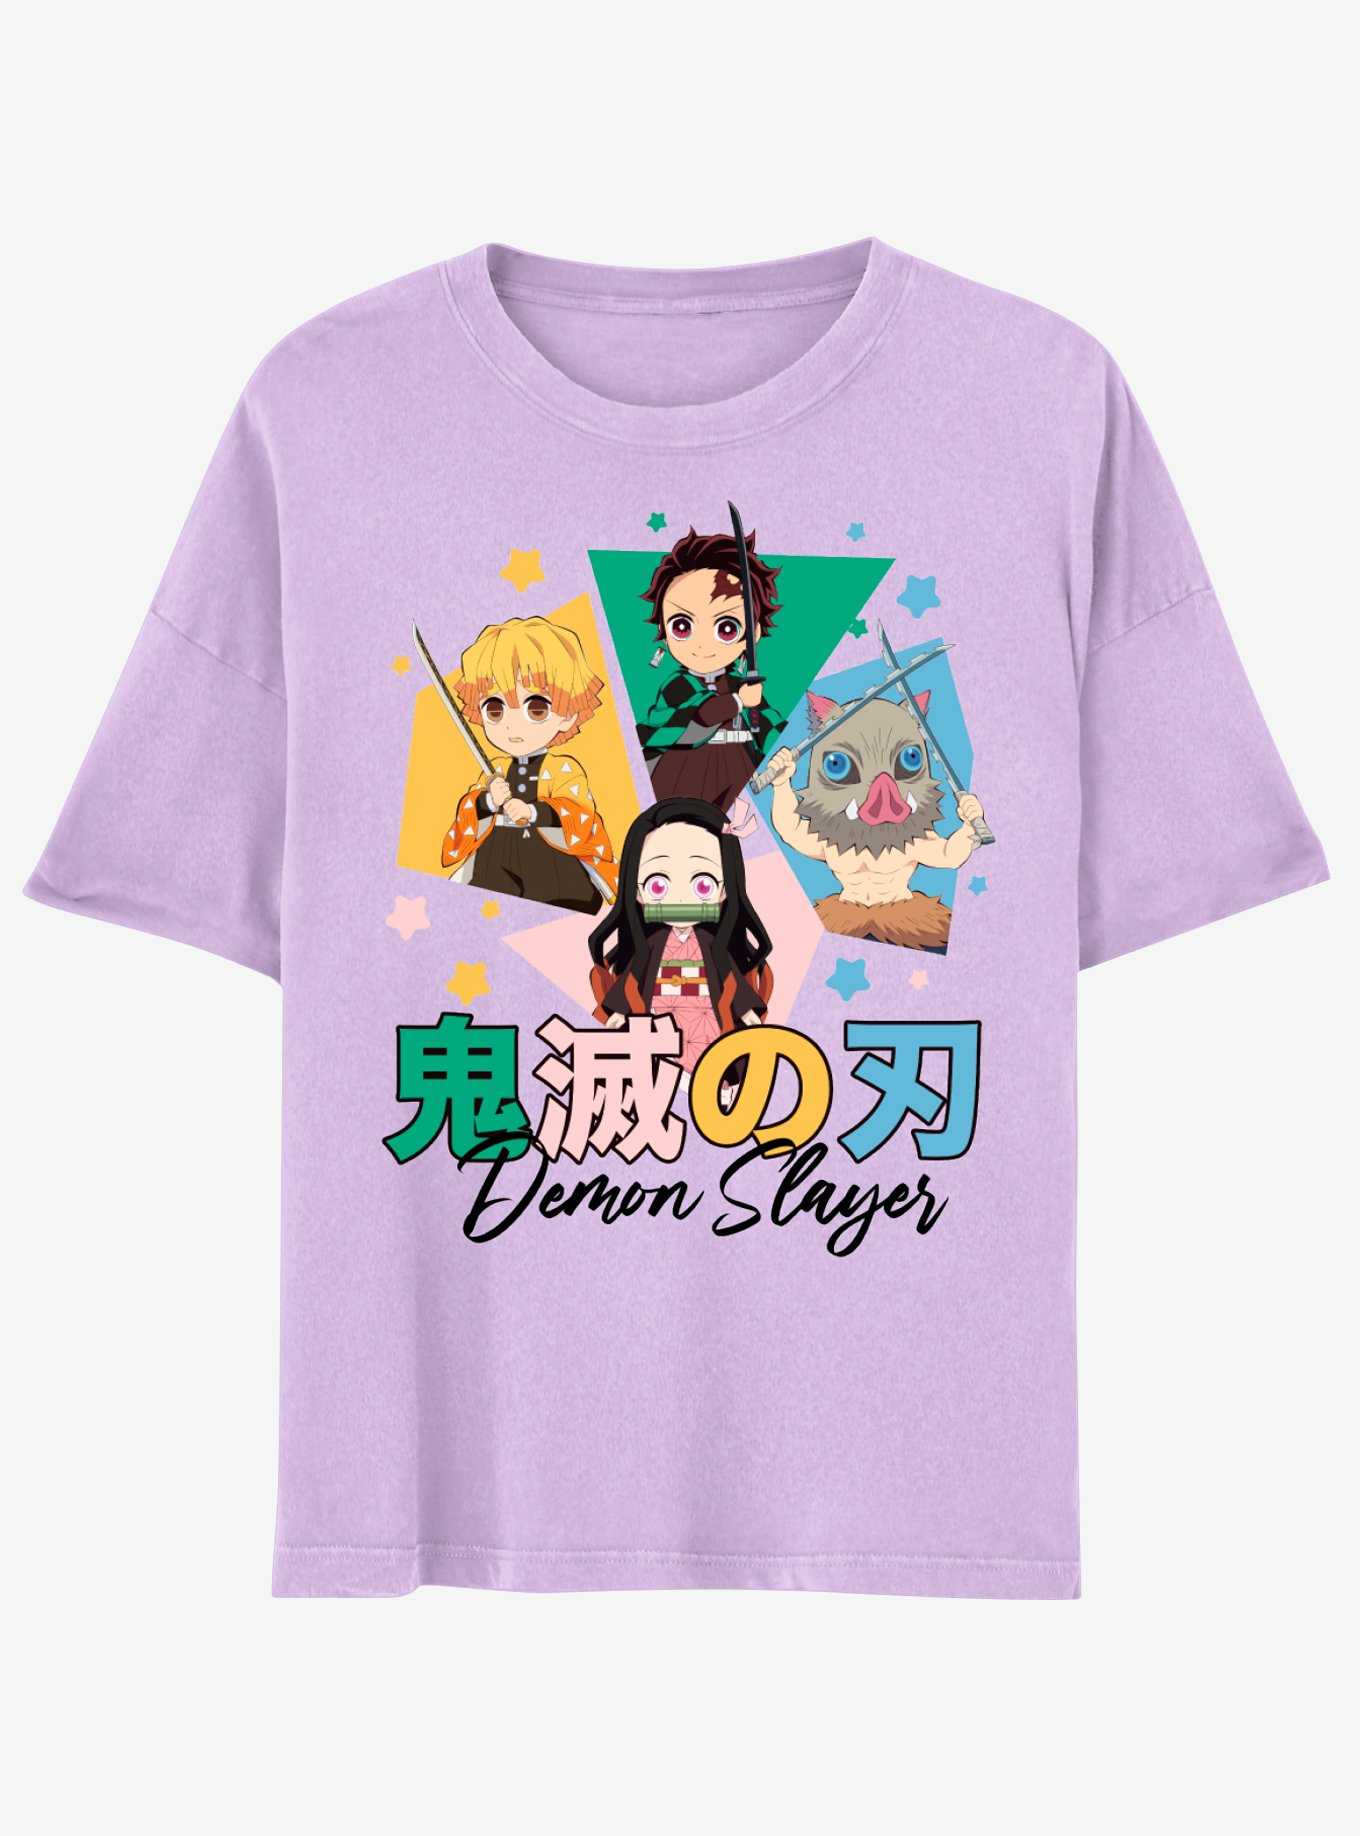 SALE! Hot Girl DOU_MA Demon Slayer Kimetsu No Yaiba Anime T Shirt Size  S_5XL 